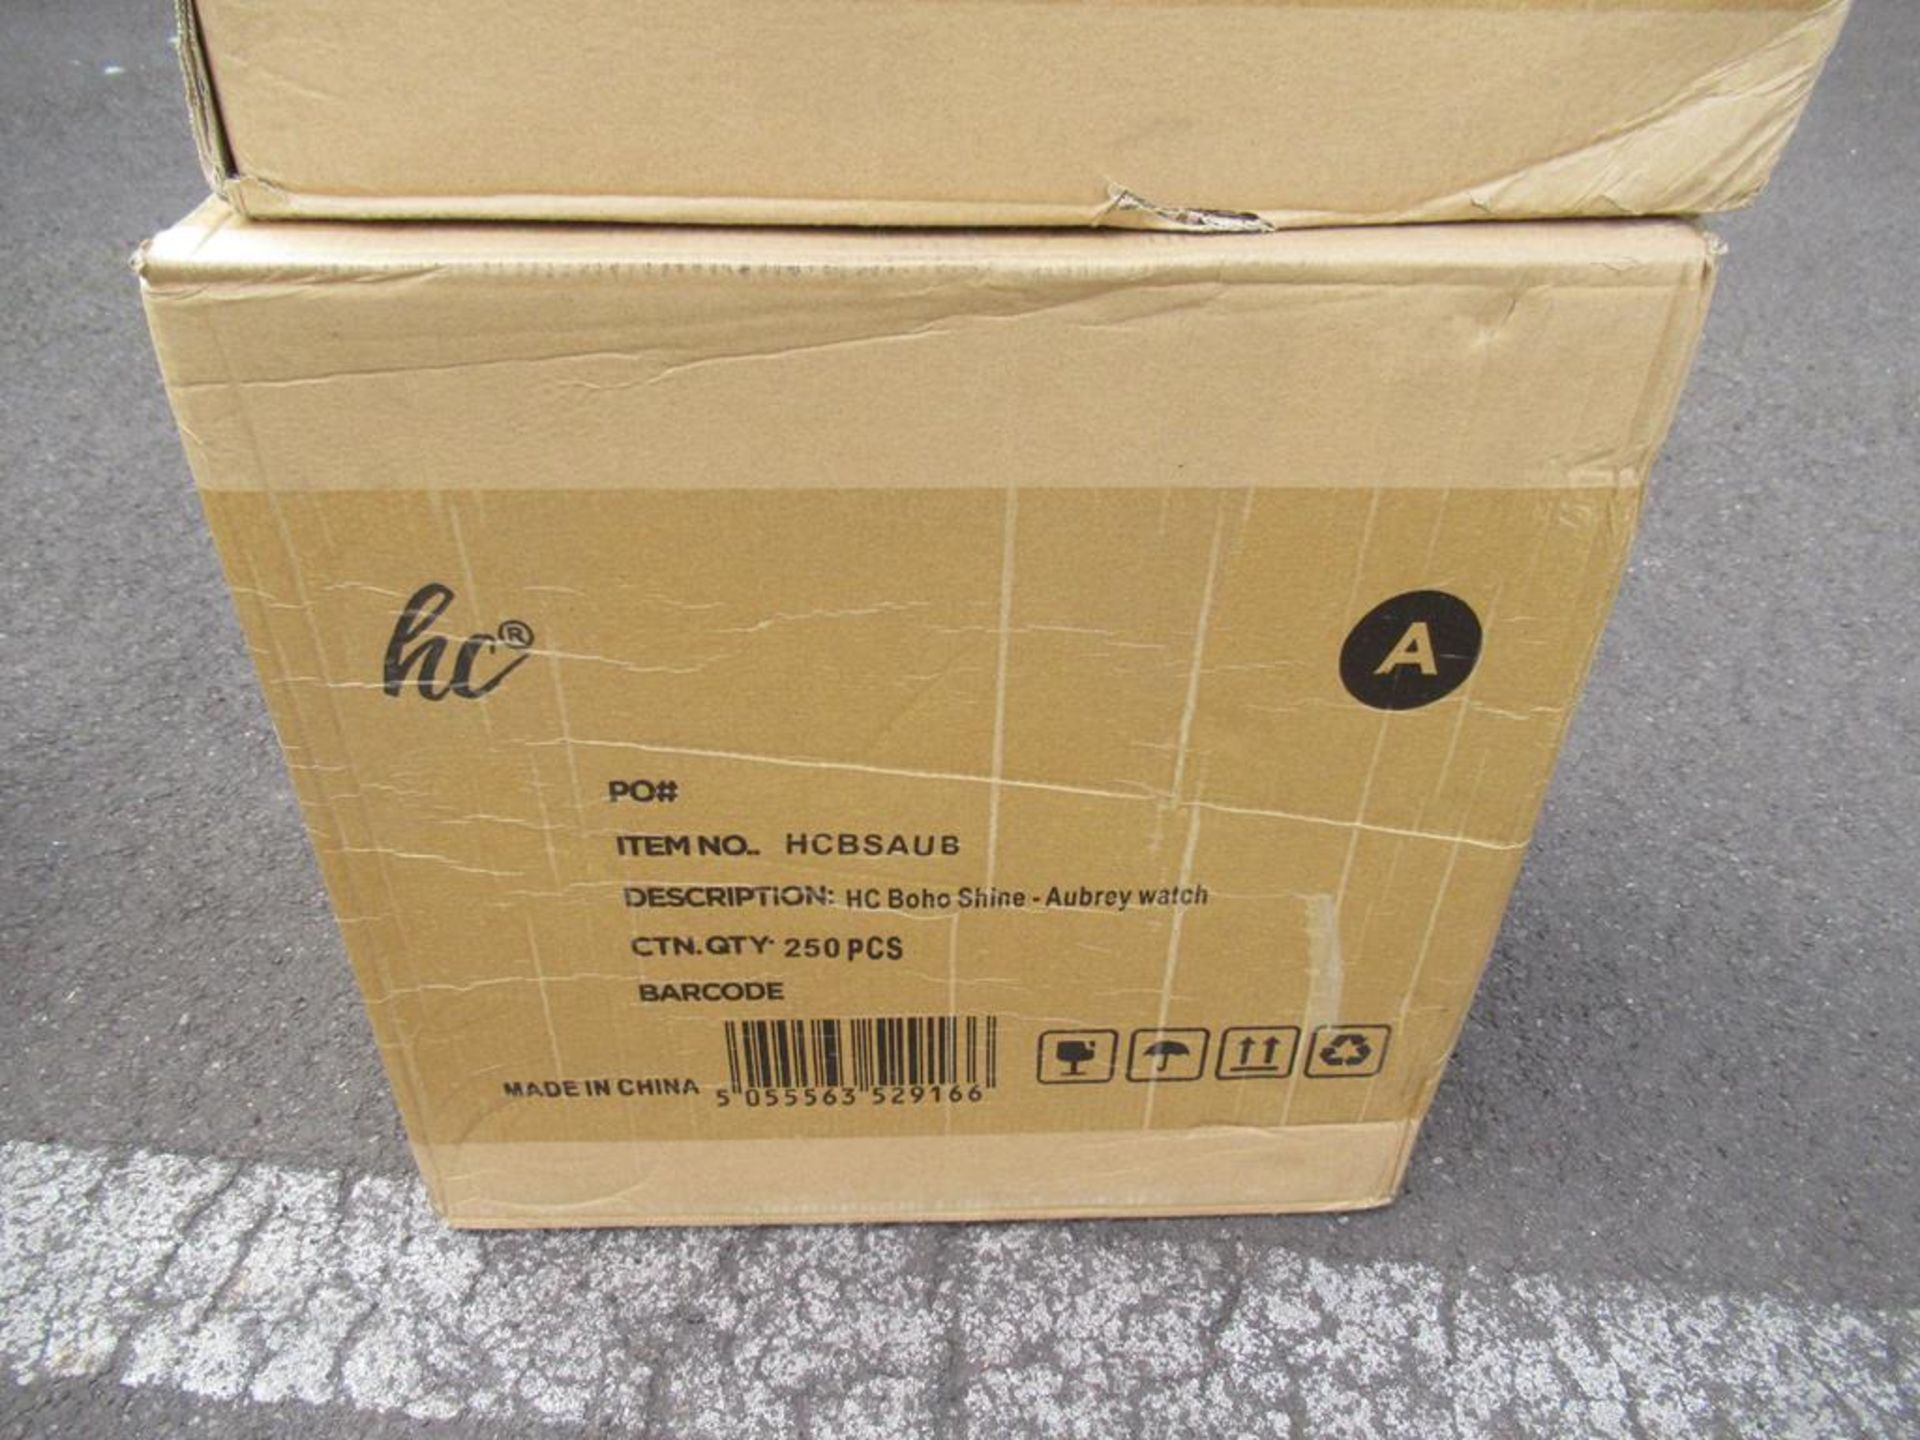 A Box of 200x HC Boho Shine- Aubry Watch - Image 2 of 2